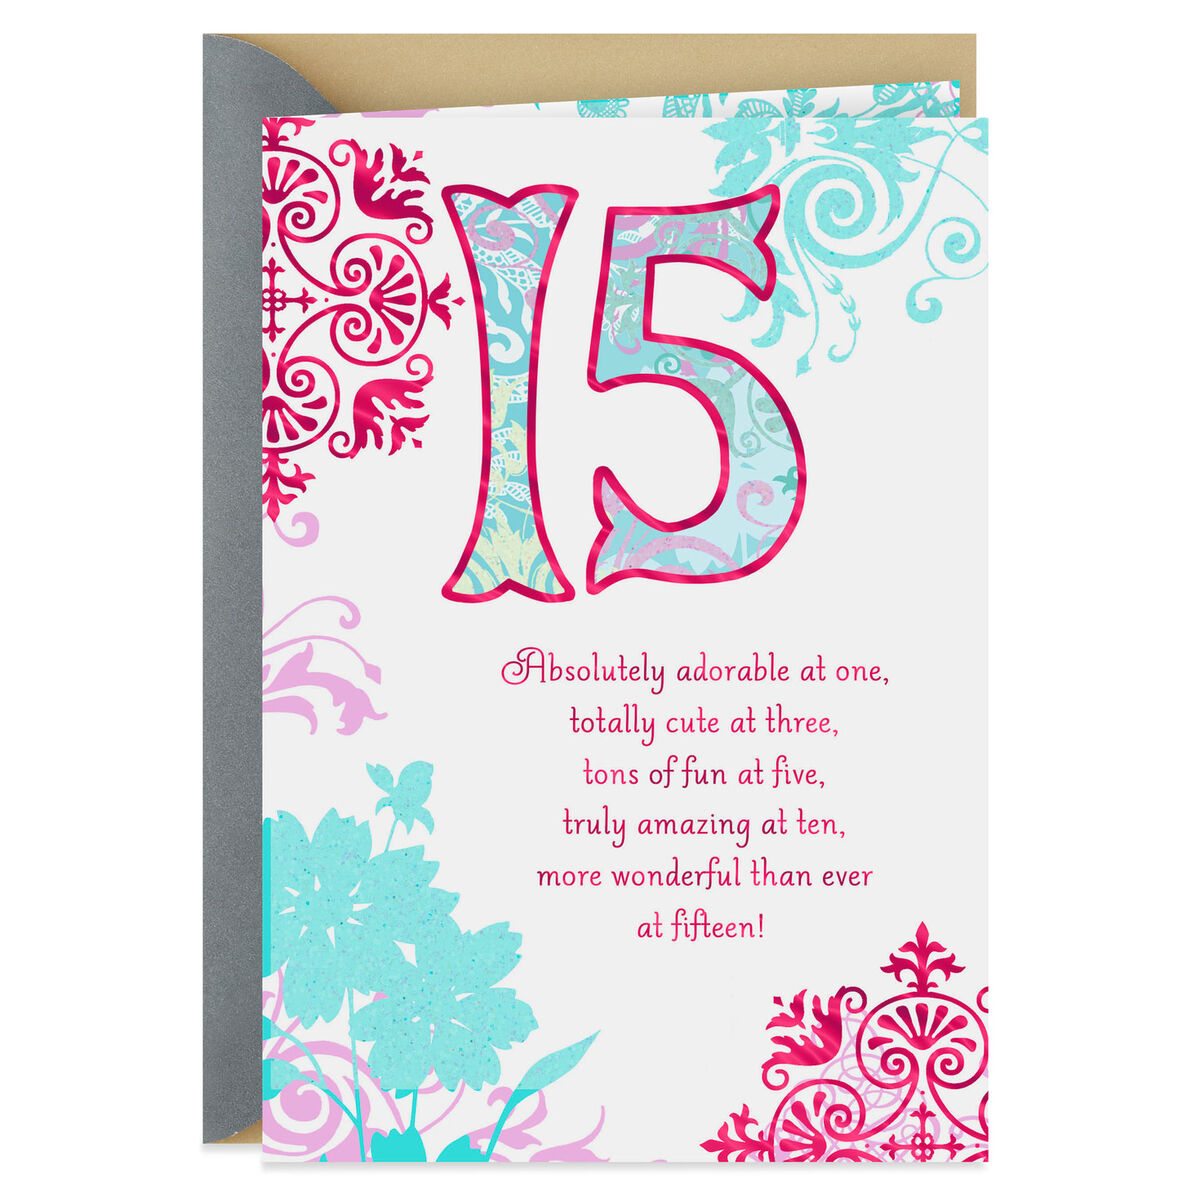 More Wonderful Than Ever 15th Birthday Card - Greeting Cards - Hallmark